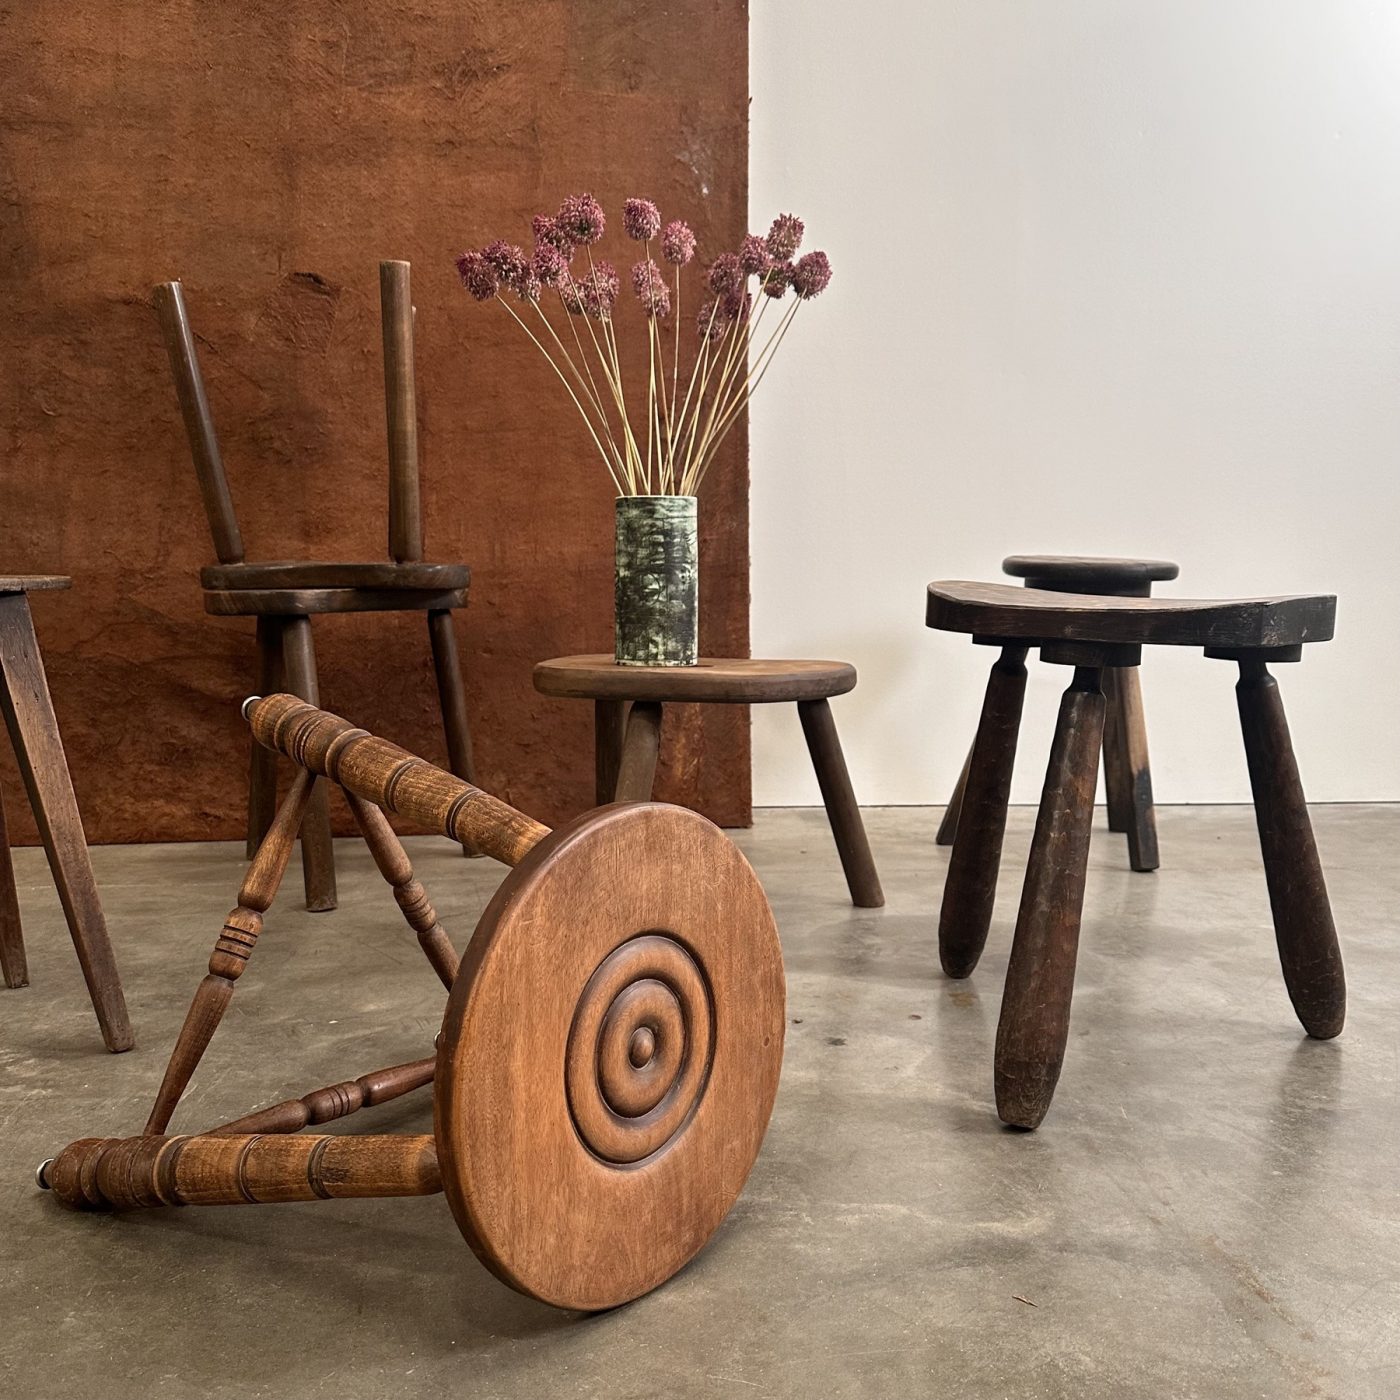 objet-vagabond-stool-collection0000